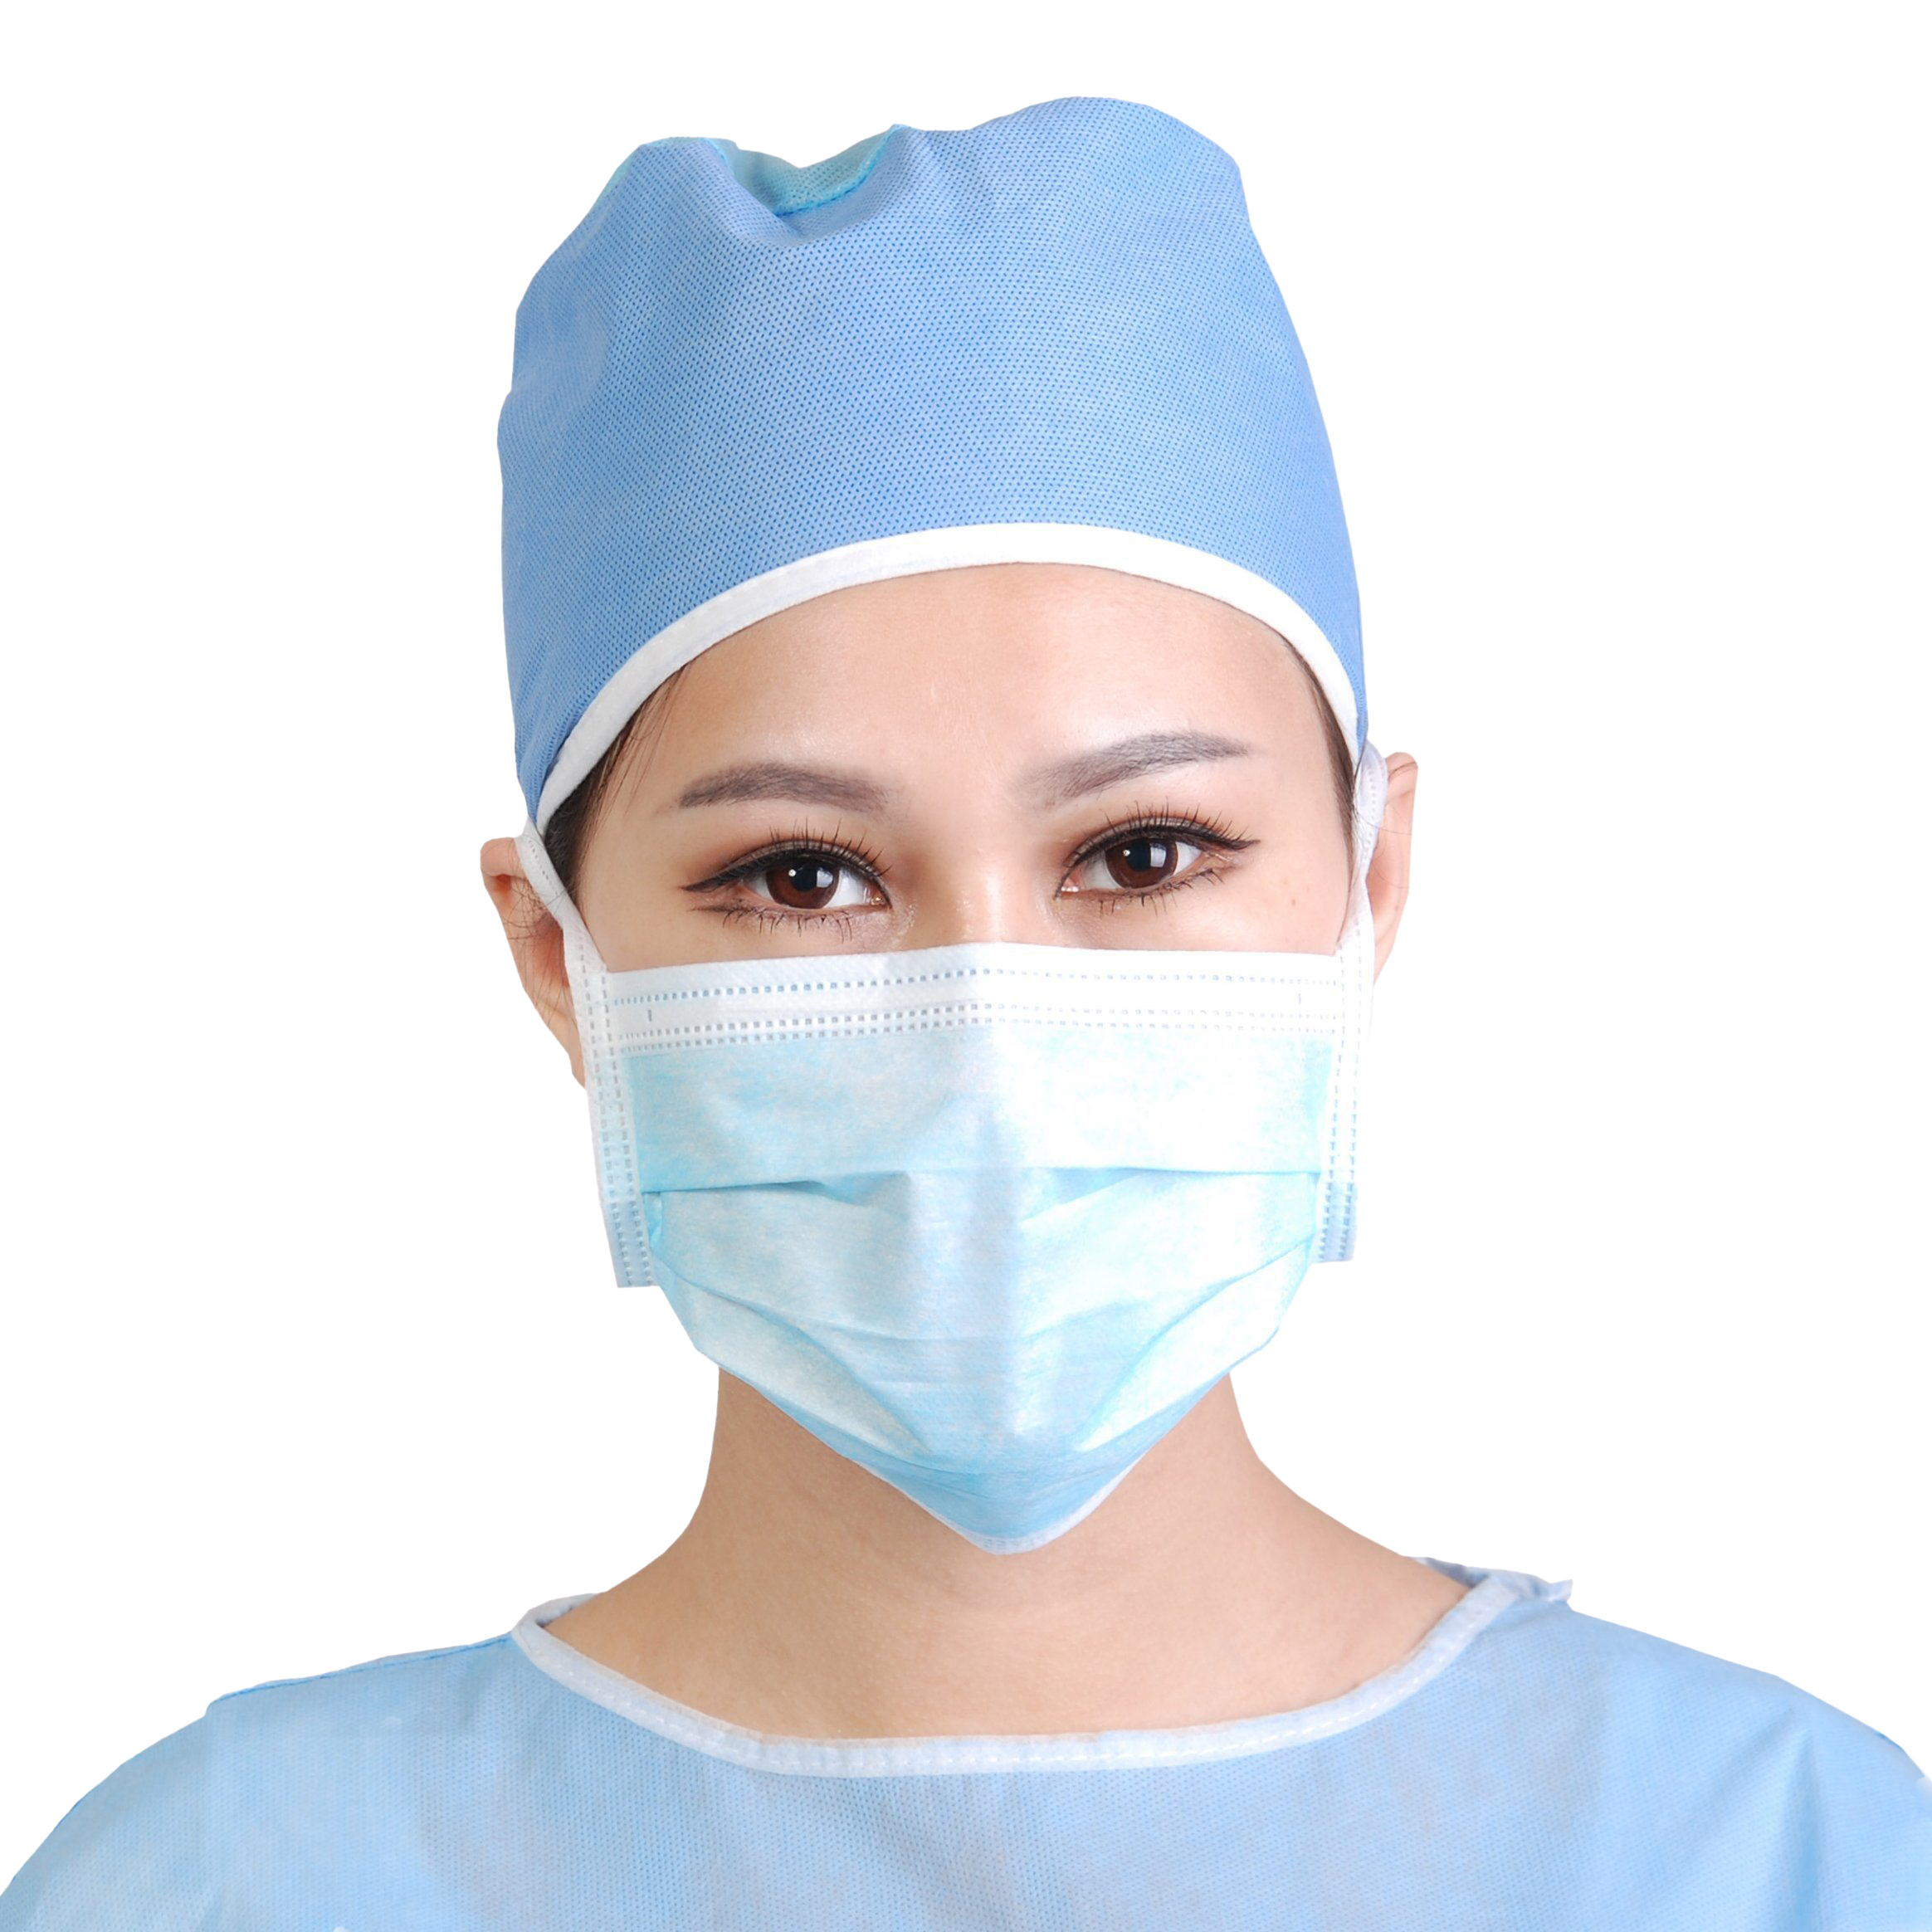 Medical Face Mask PNG Clipart Background